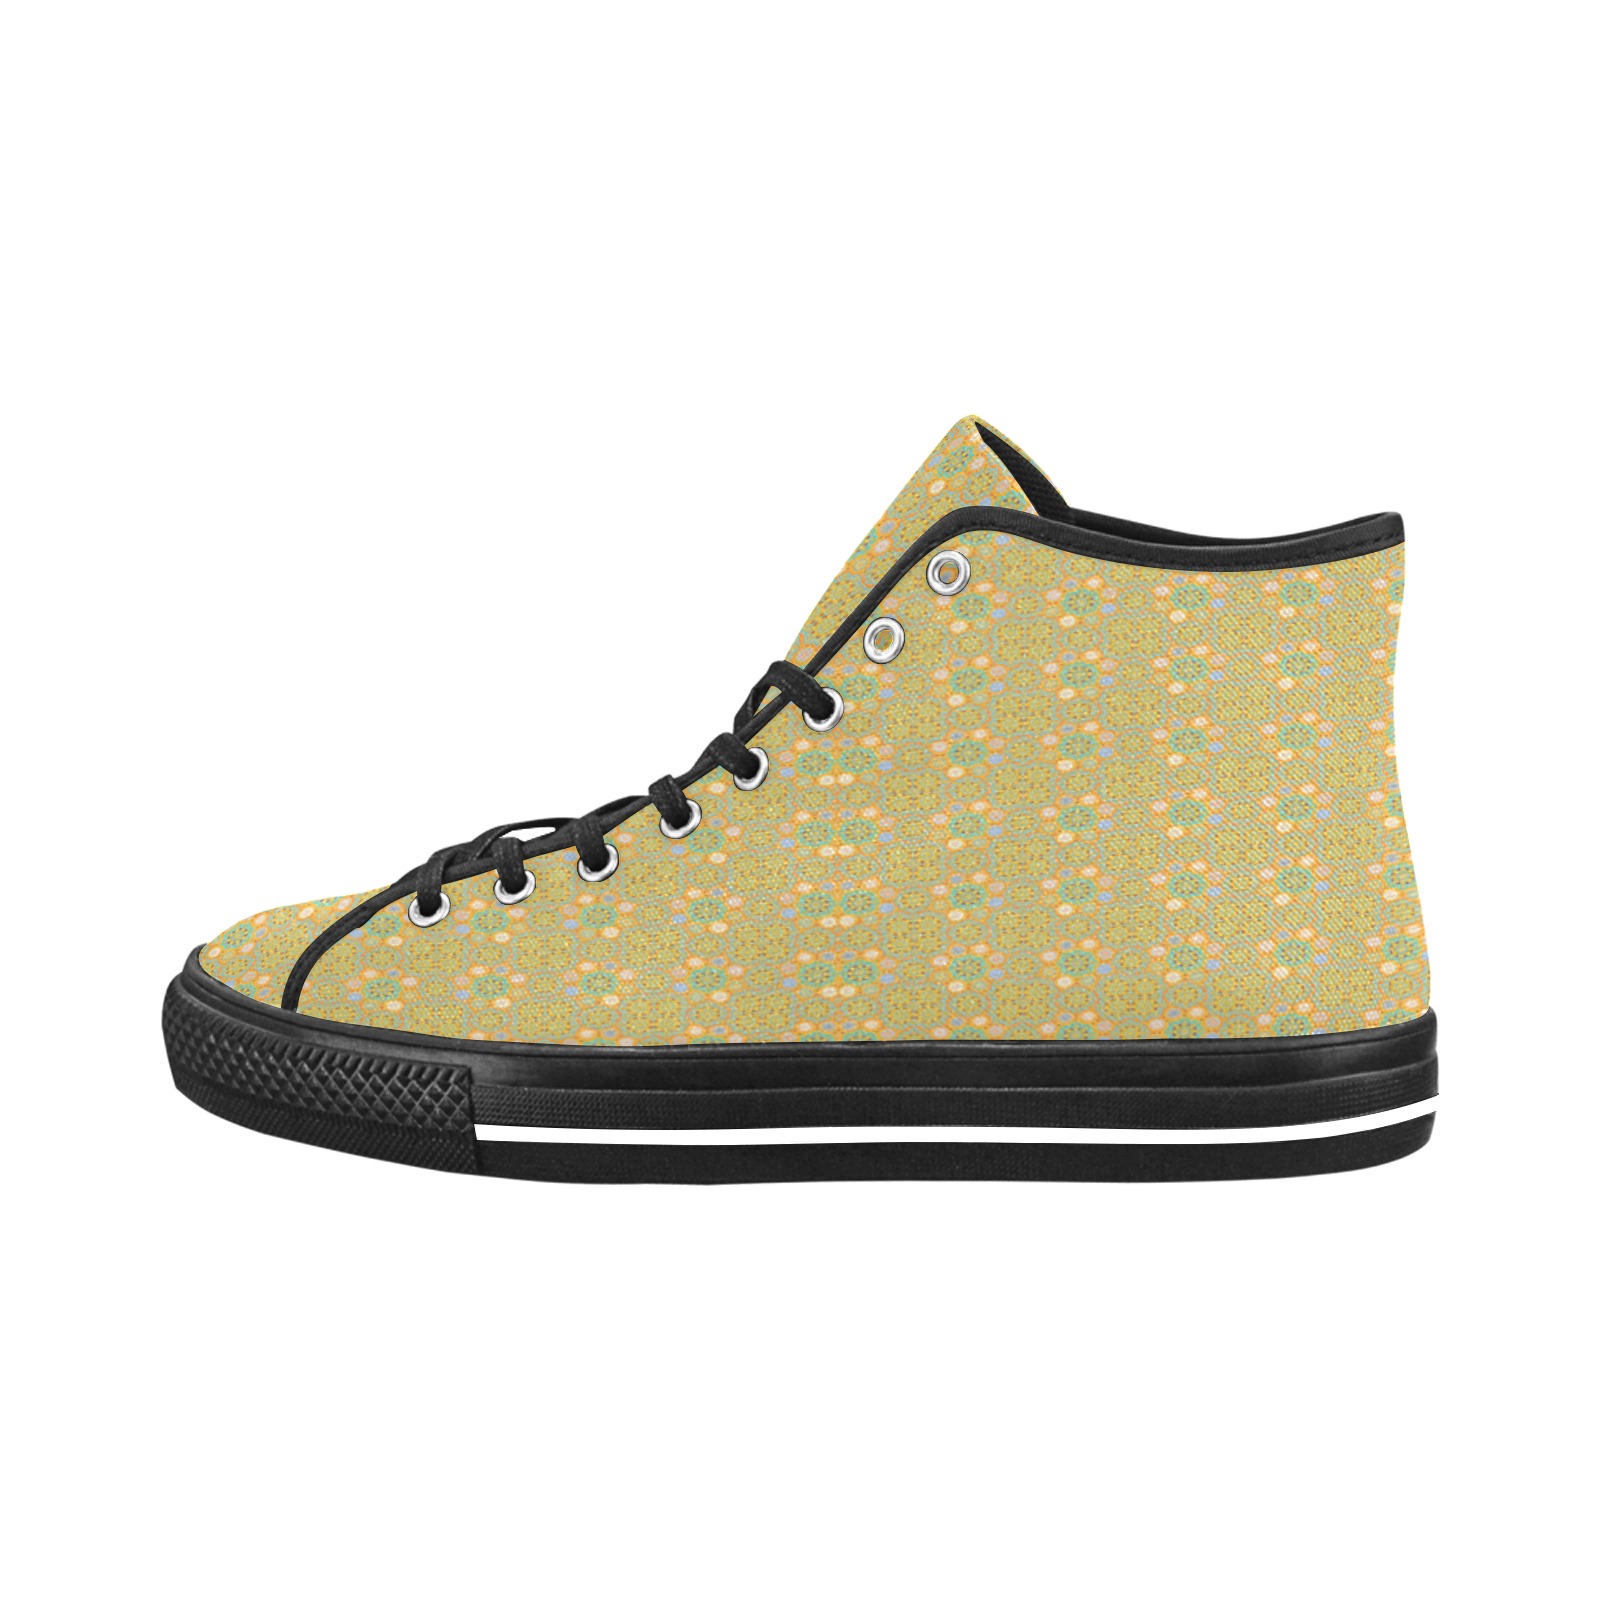 Octo brightener arabesque Moorish tangerine style pattern Vancouver H Men's Canvas Shoes (1013-1)